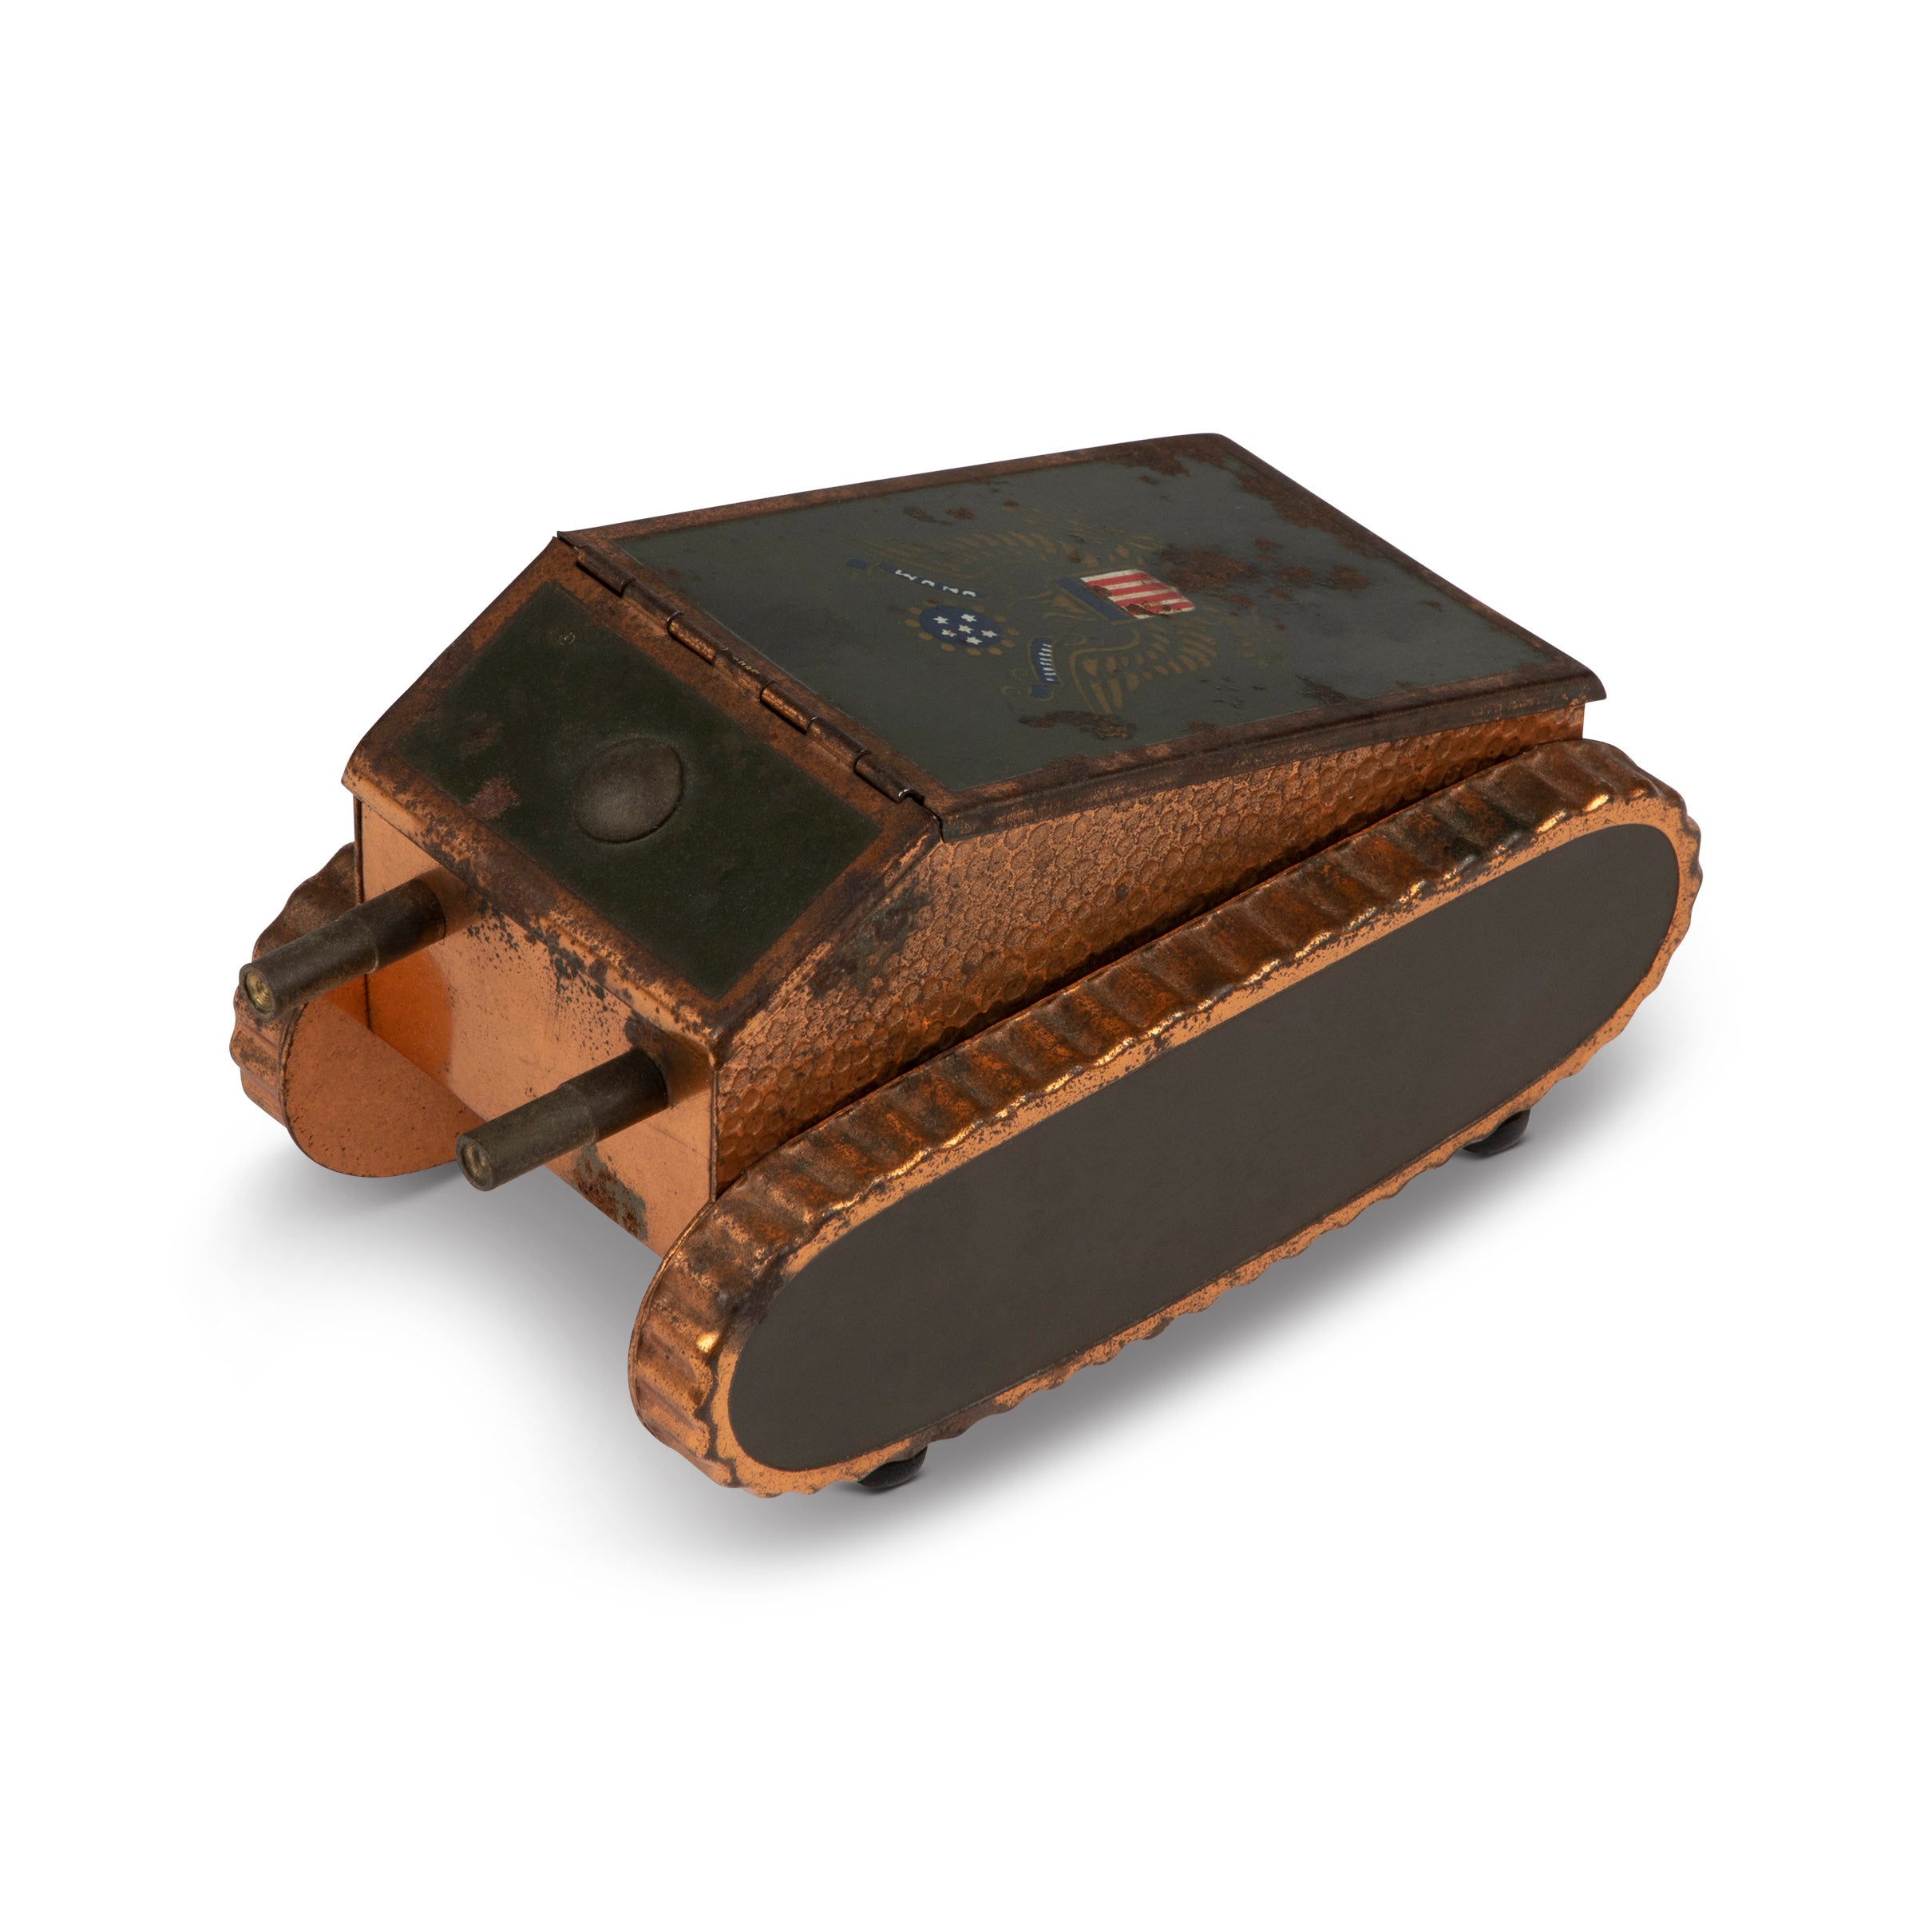 Vintage Trench Art Copper Tank Cigarette Holder